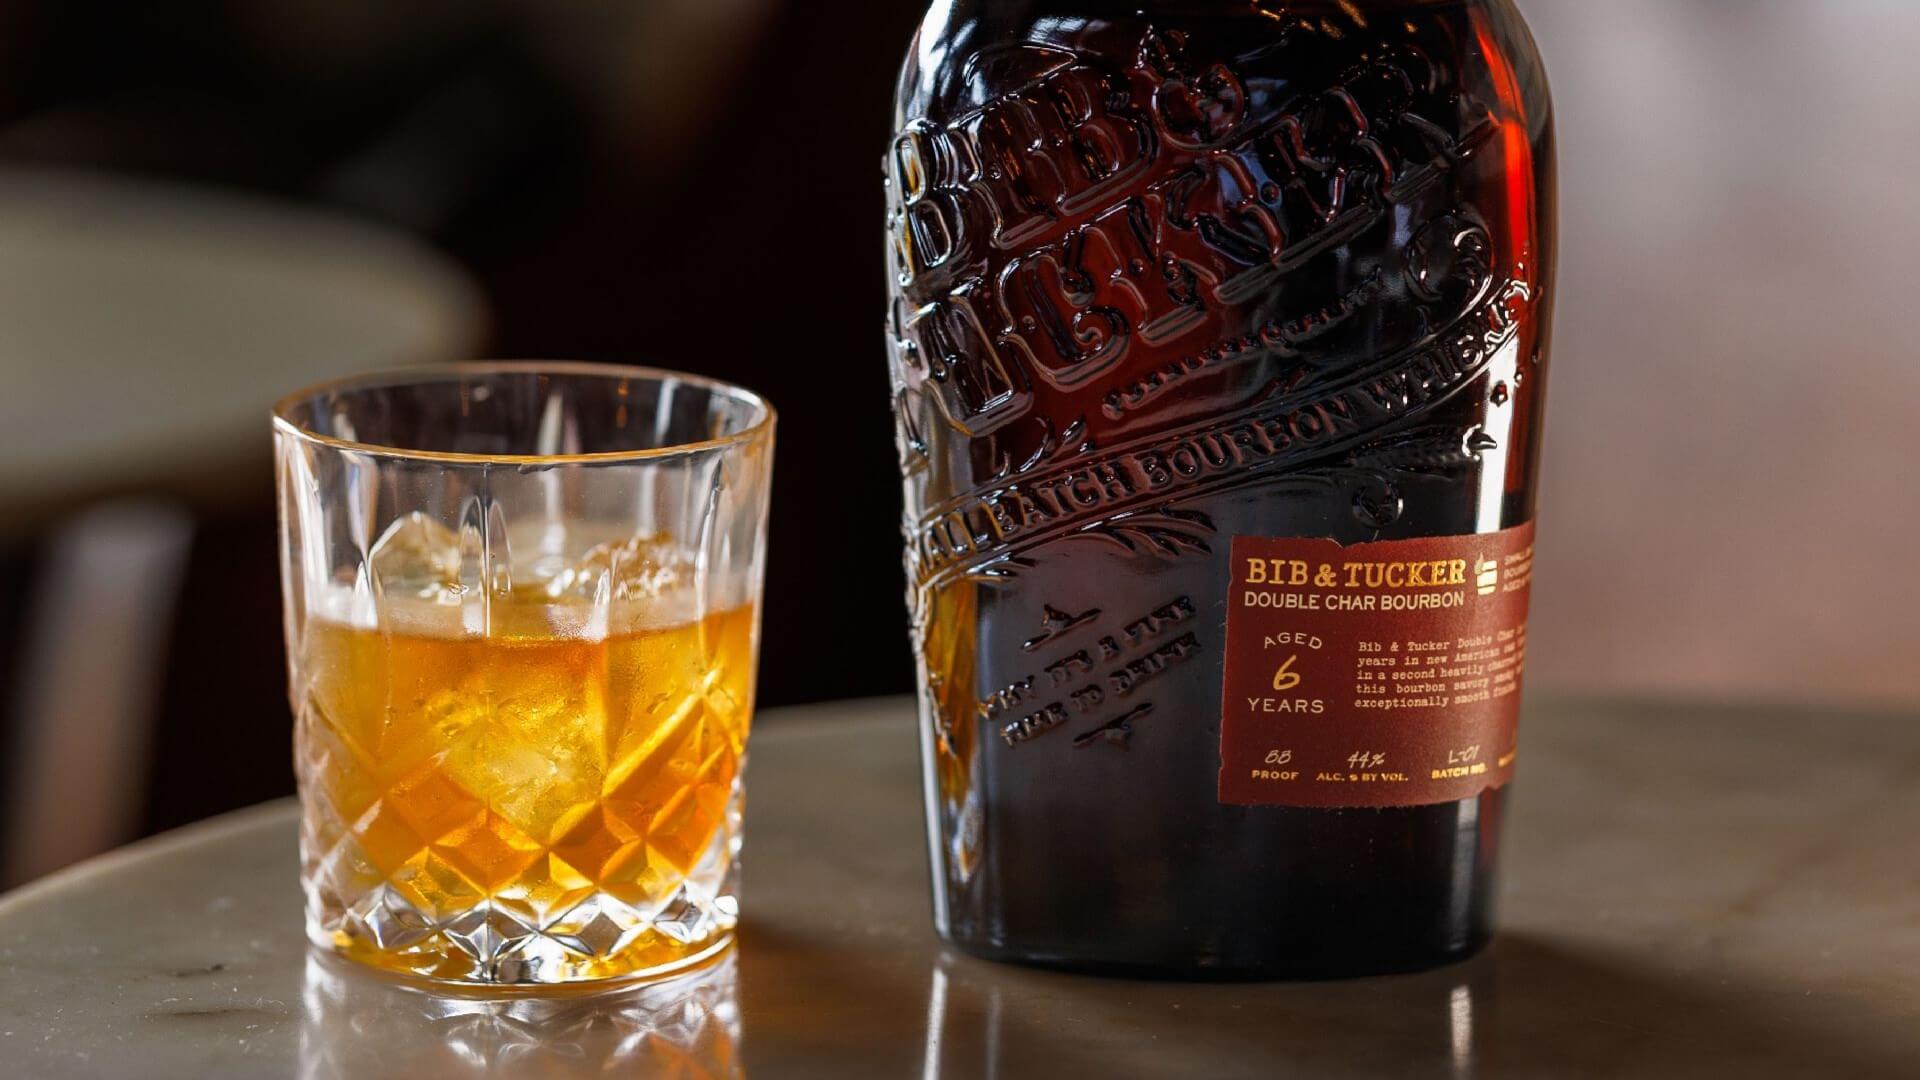 Bib & Tucker Double Char bourbon bottle and cocktail